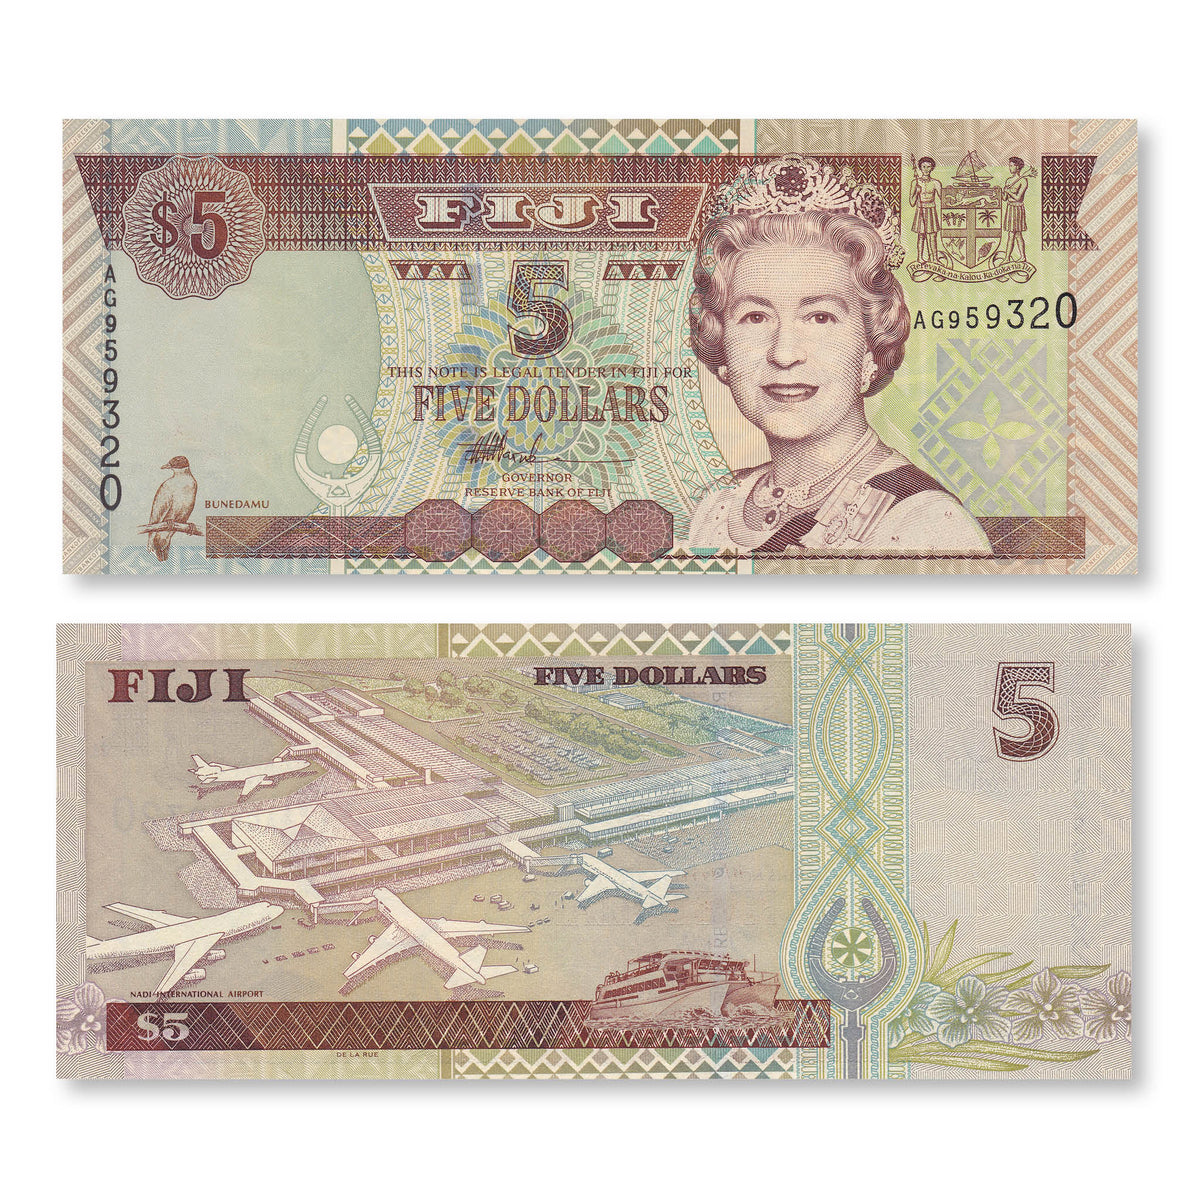 Fiji 5 Dollars, 2002, B516a, P105b, UNC - Robert's World Money - World Banknotes